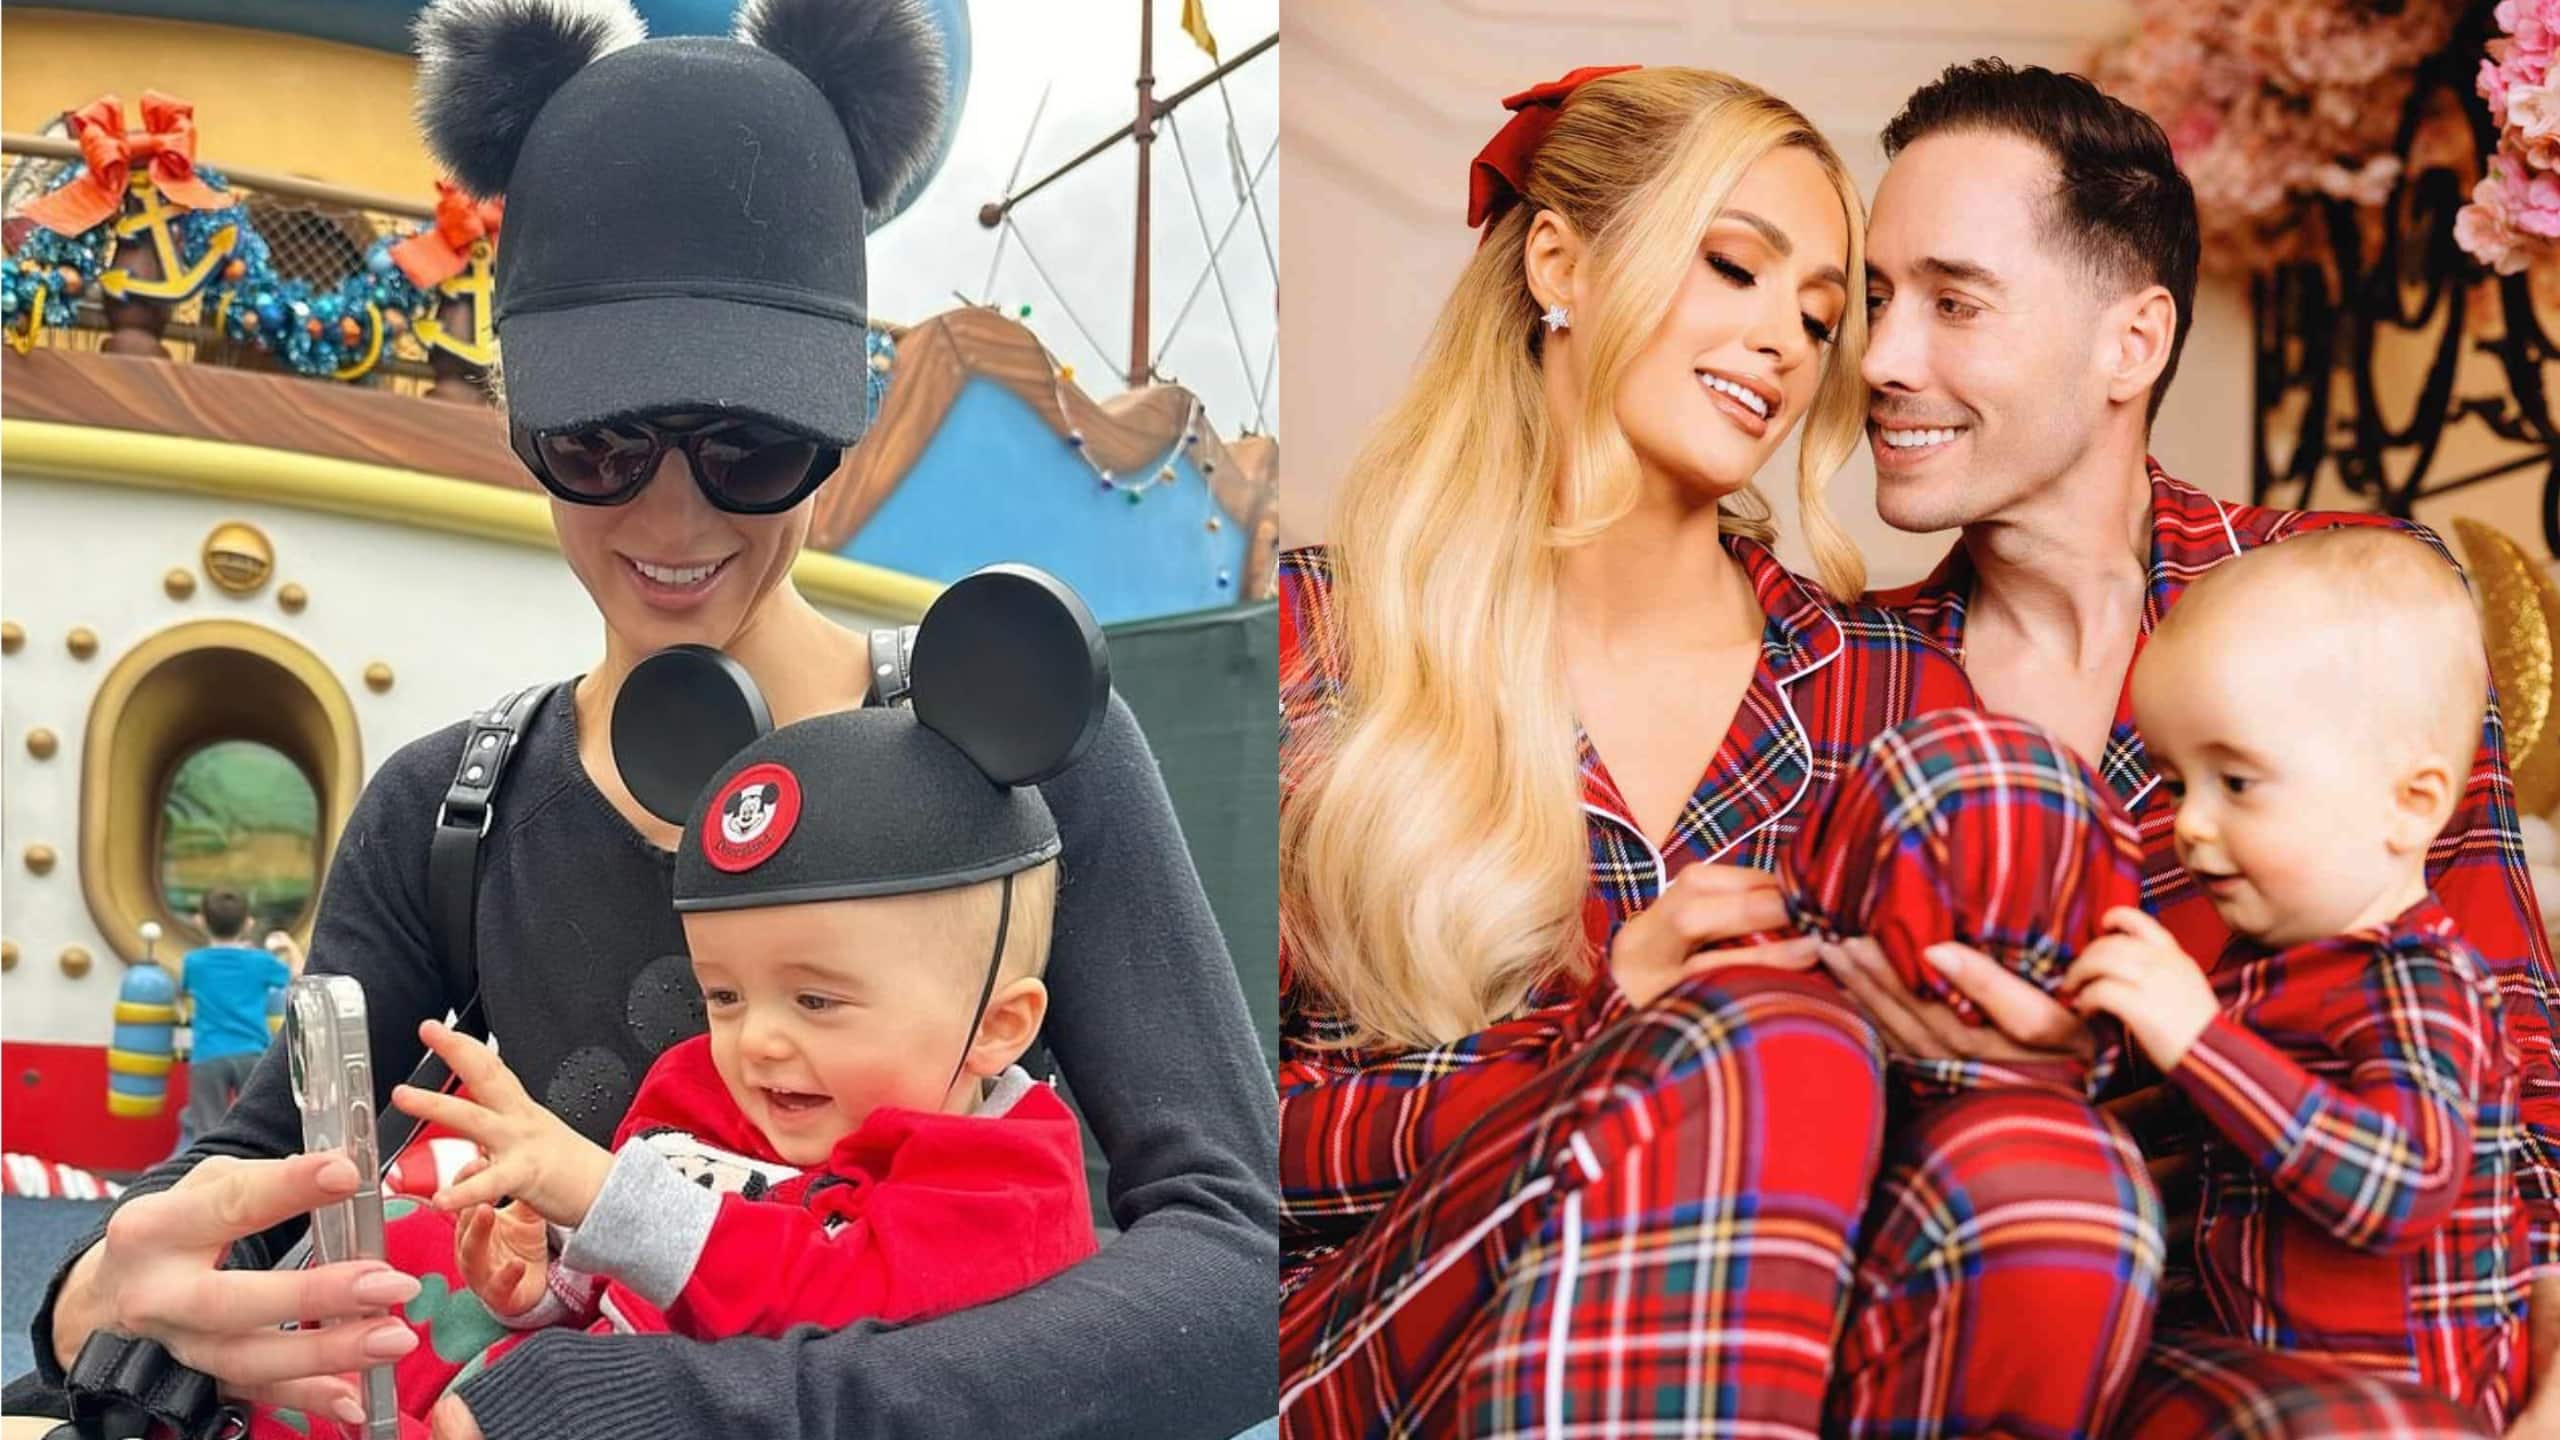 Paris Hilton celebrated Christmas with family. She took Phoenix to Disney Land